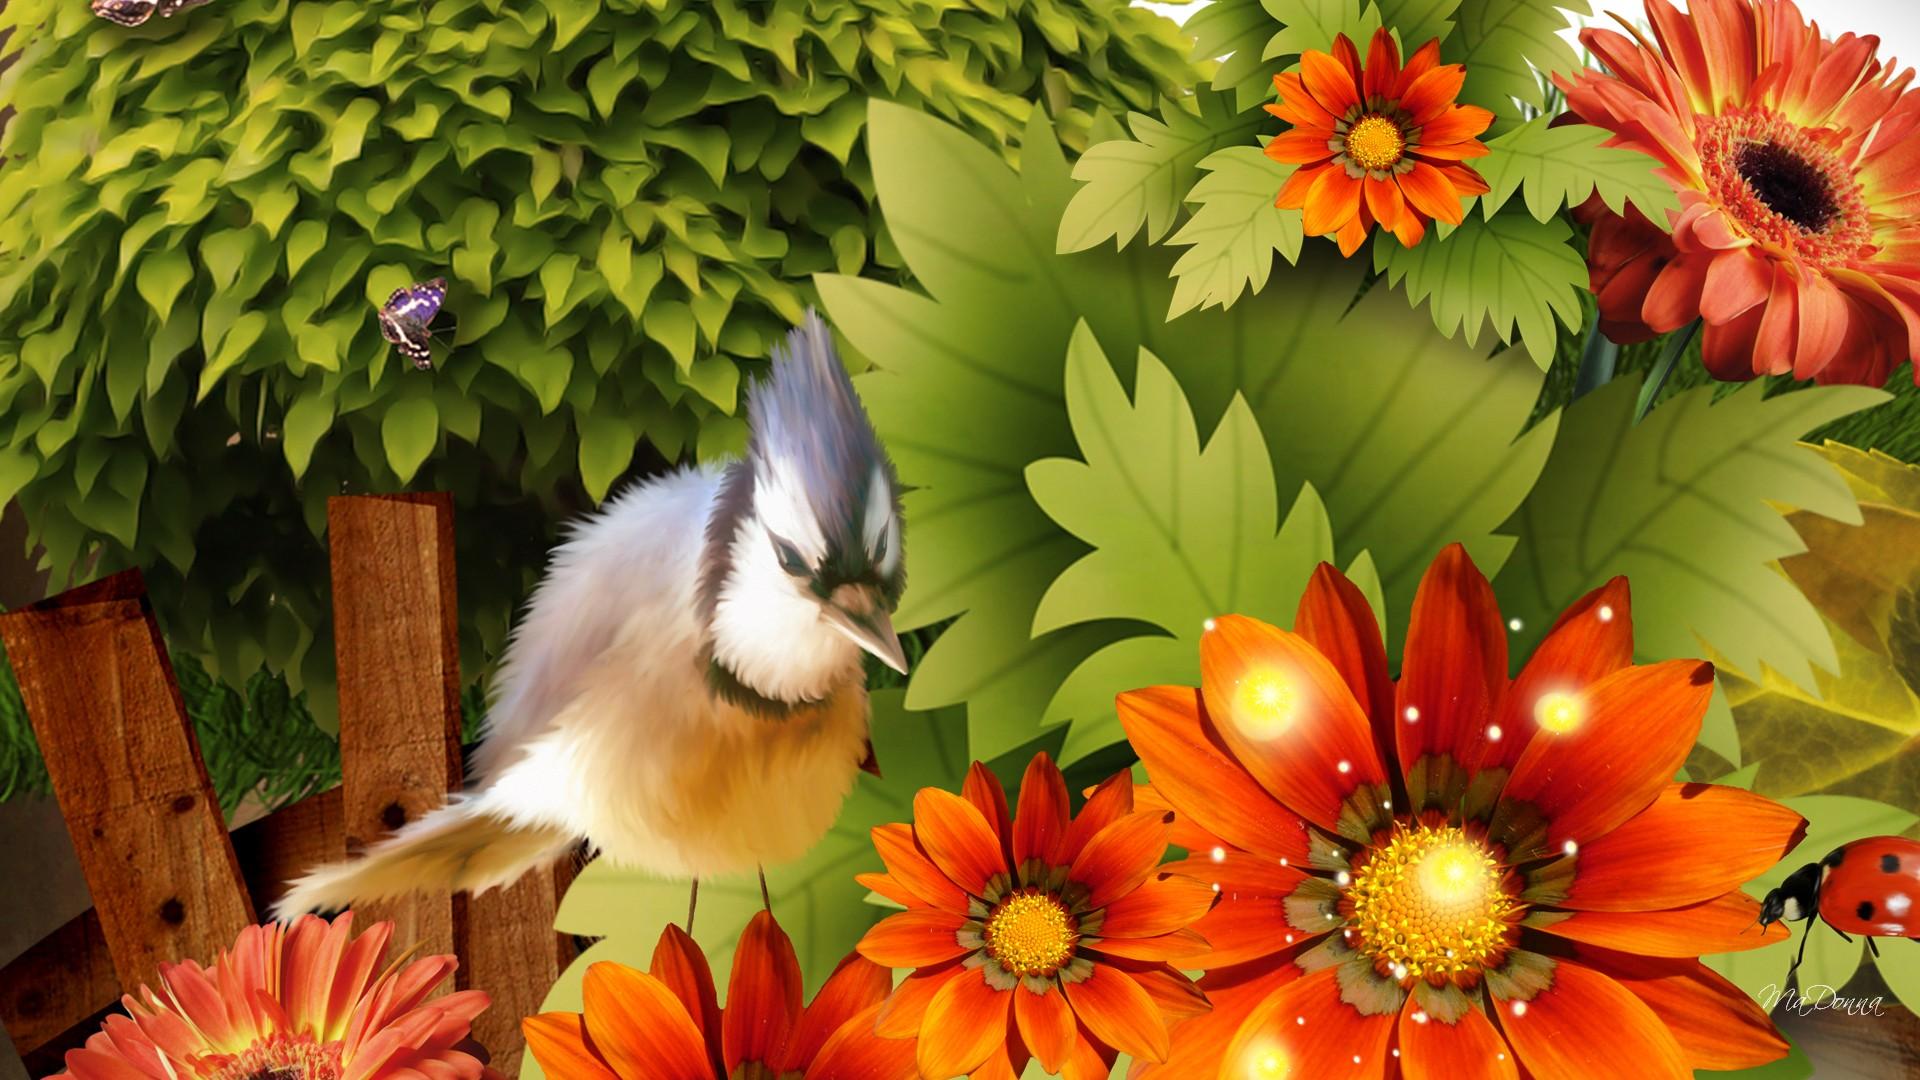 mobile desktop background full hd bird wallpaper download